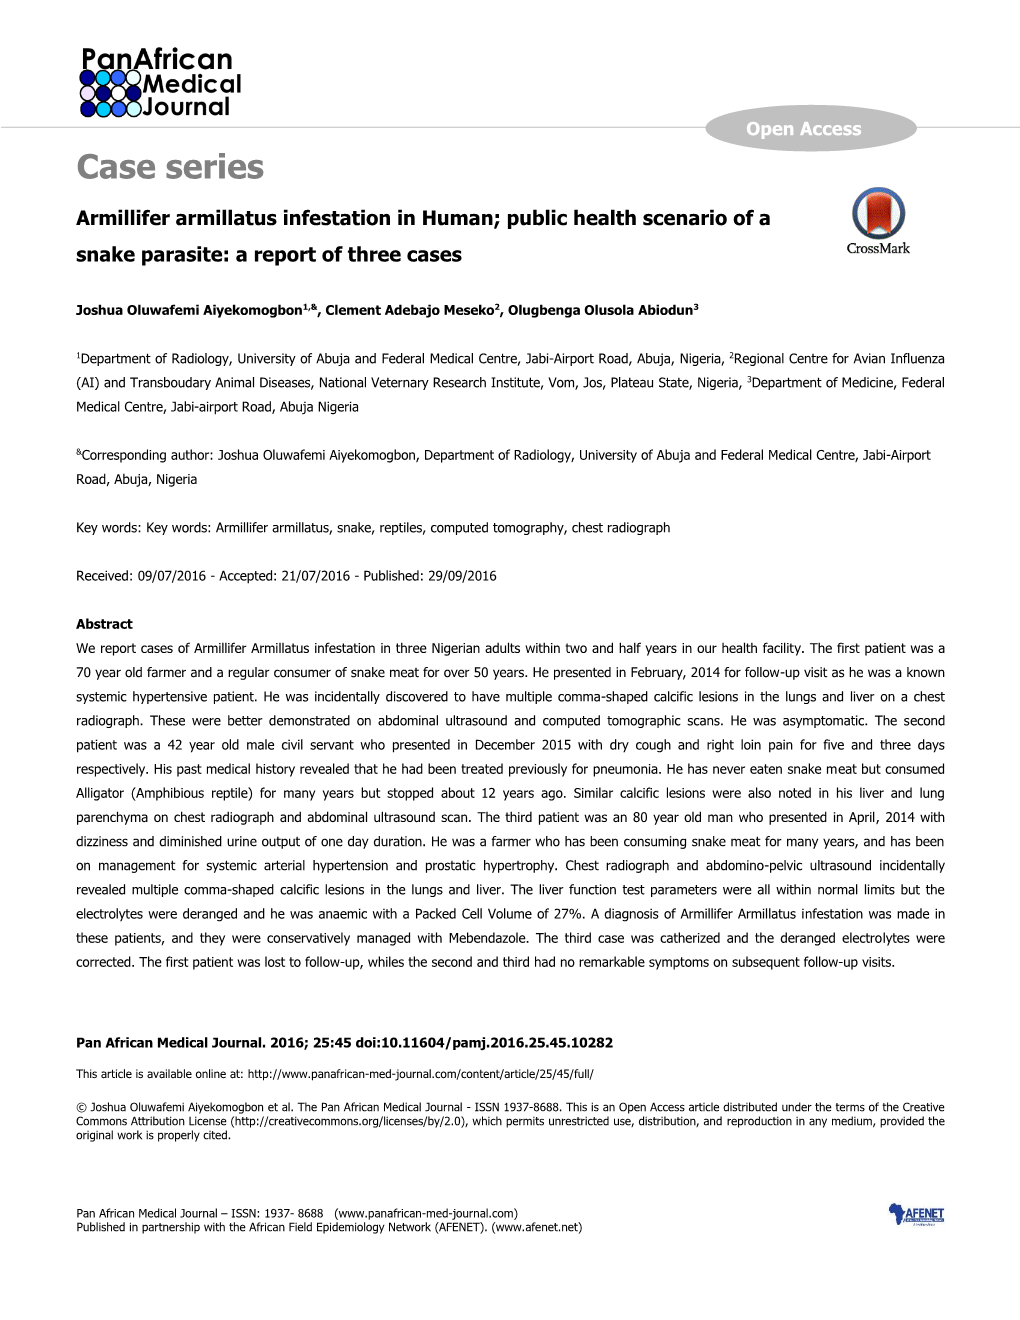 Case Series Armillifer Armillatus Infestation in Human; Public Health Scenario of a Snake Parasite: a Report of Three Cases